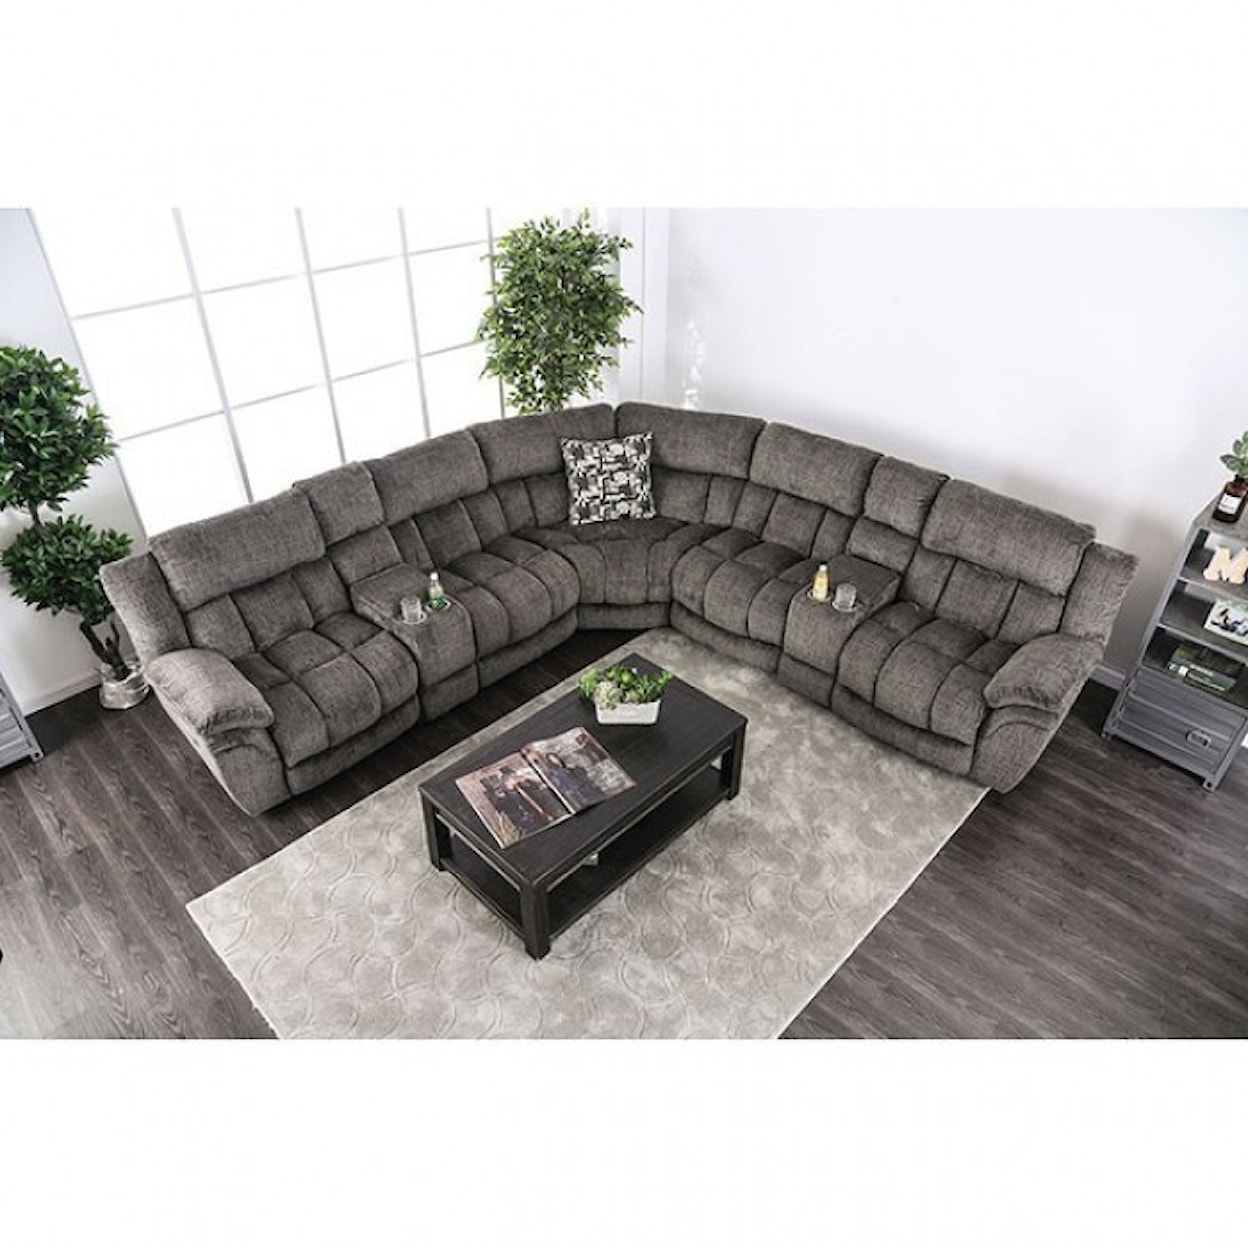 Furniture of America Irene Sectional Sofa